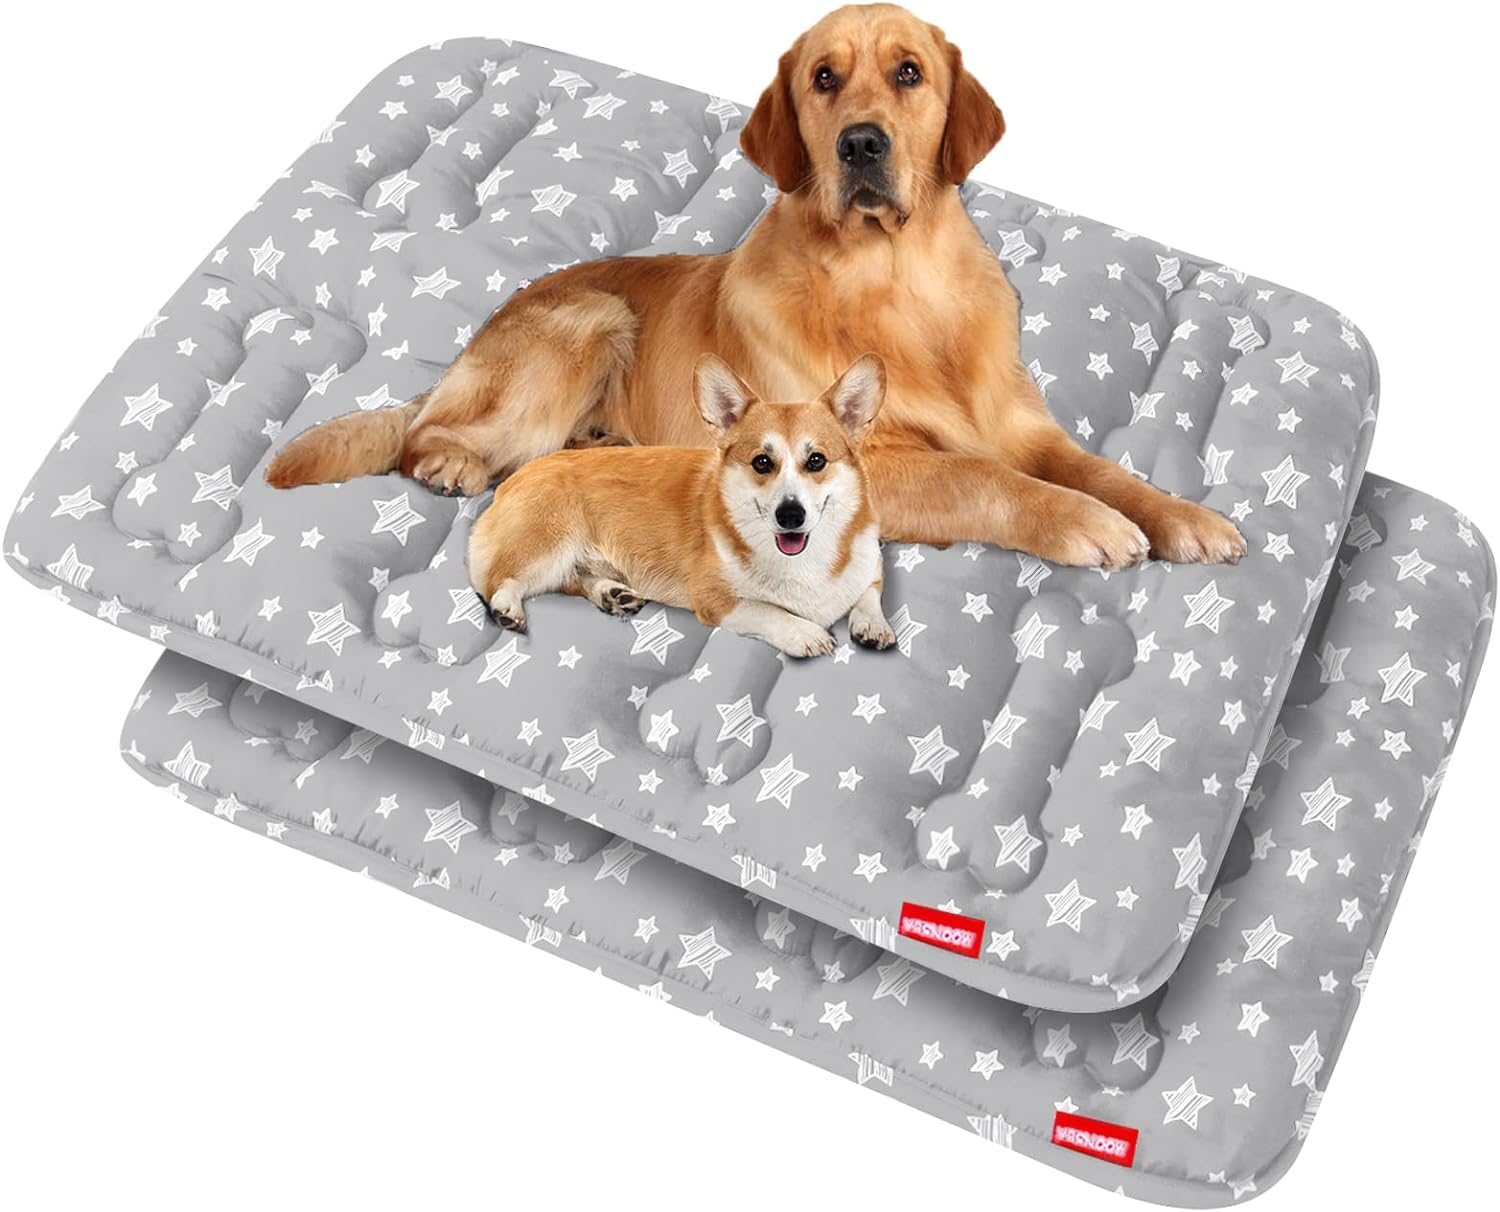 Dog Crate Mat- Soft ,Star Prints, Anti-Slip Bottom, Machine Washable, 2 Pack, Grey Star-Moonsea Bedding